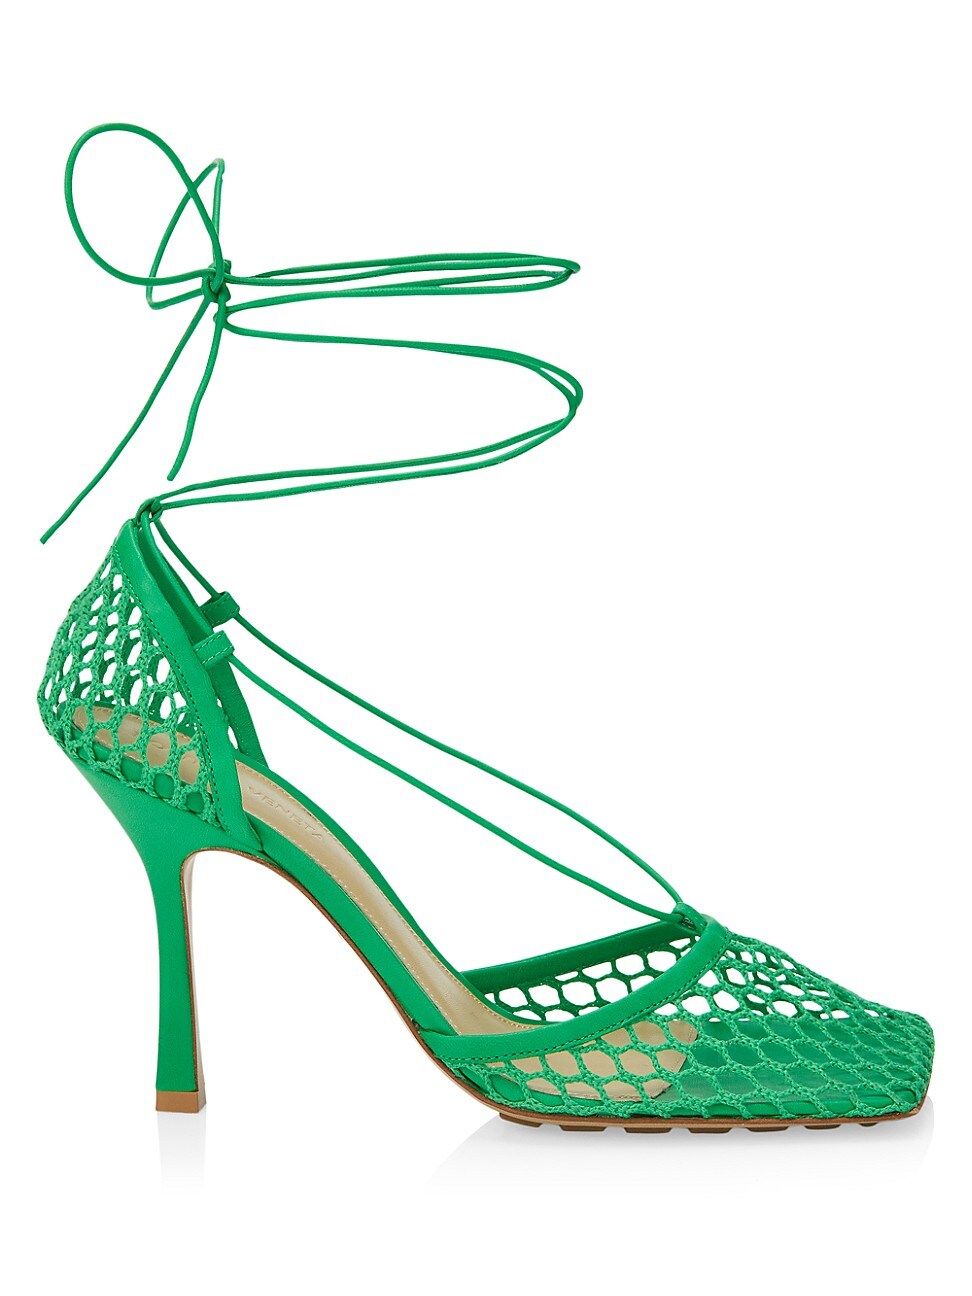 Bottega Veneta Women's Stretch Square-Toe Ankle-Strap Mesh Pumps - Grass - Size 7.5 | Saks Fifth Avenue